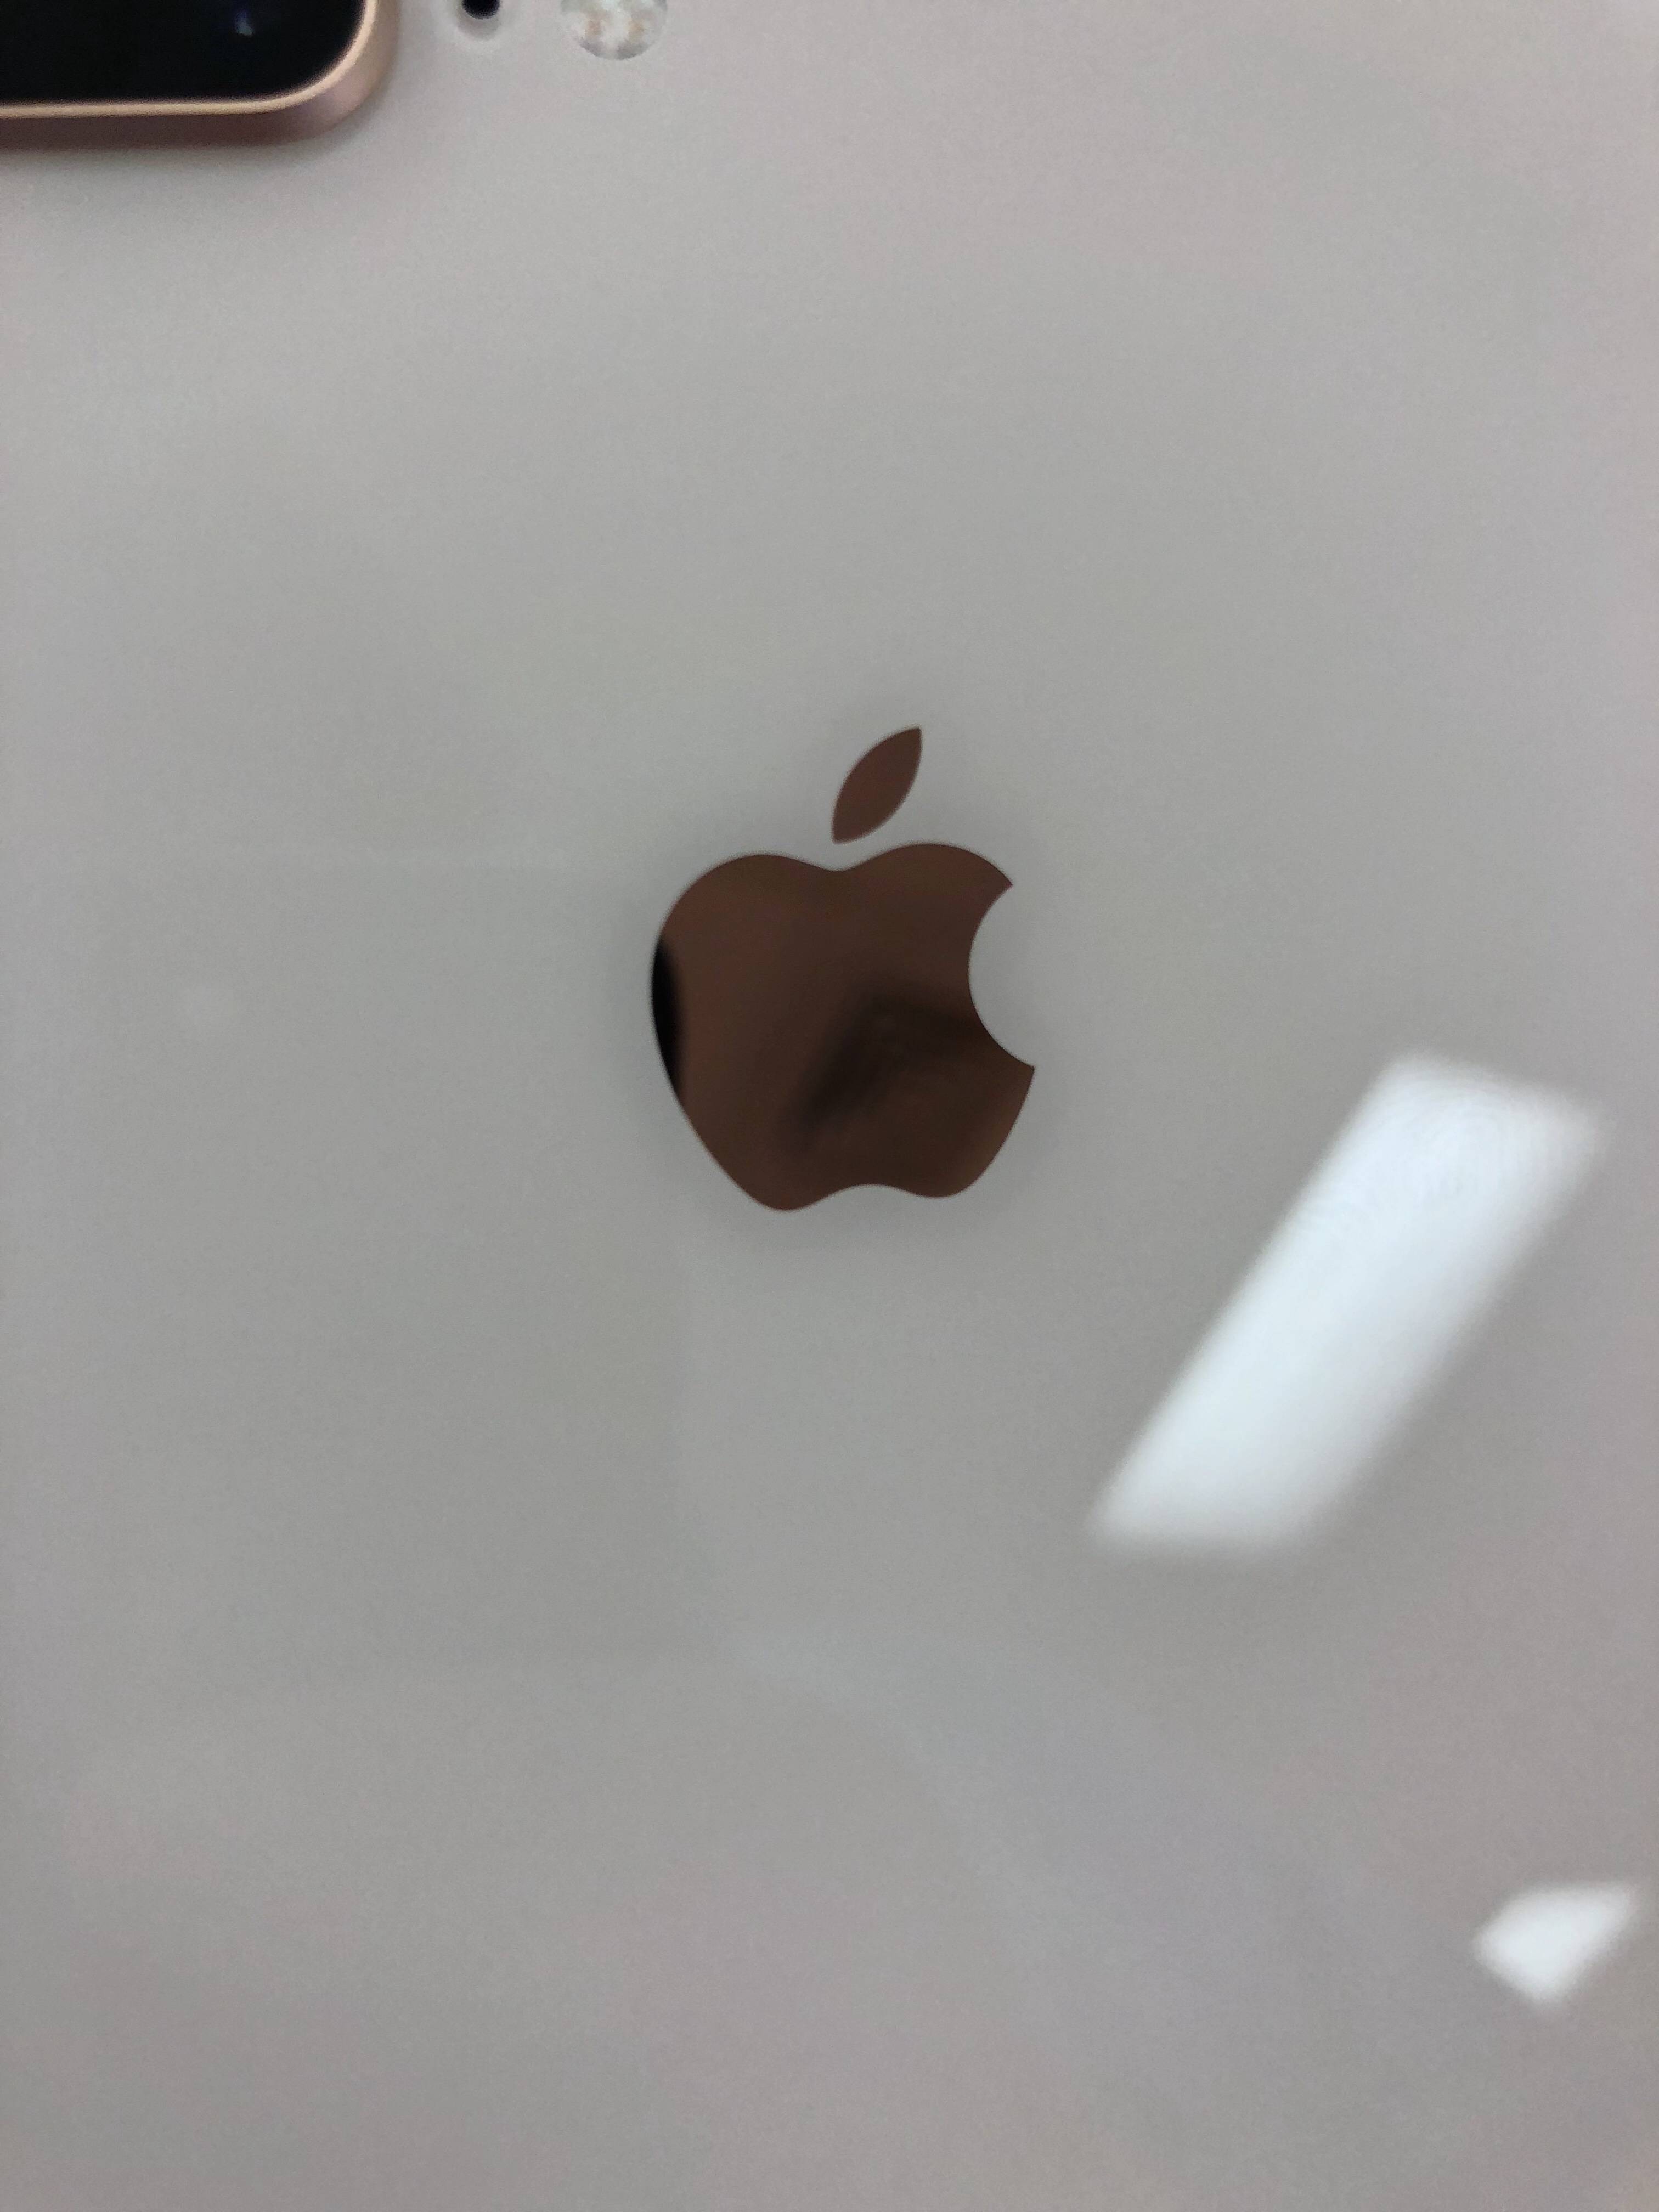 Gold Apple Logo - Anybody else see a weird Apple logo “shadow” behind the Apple on